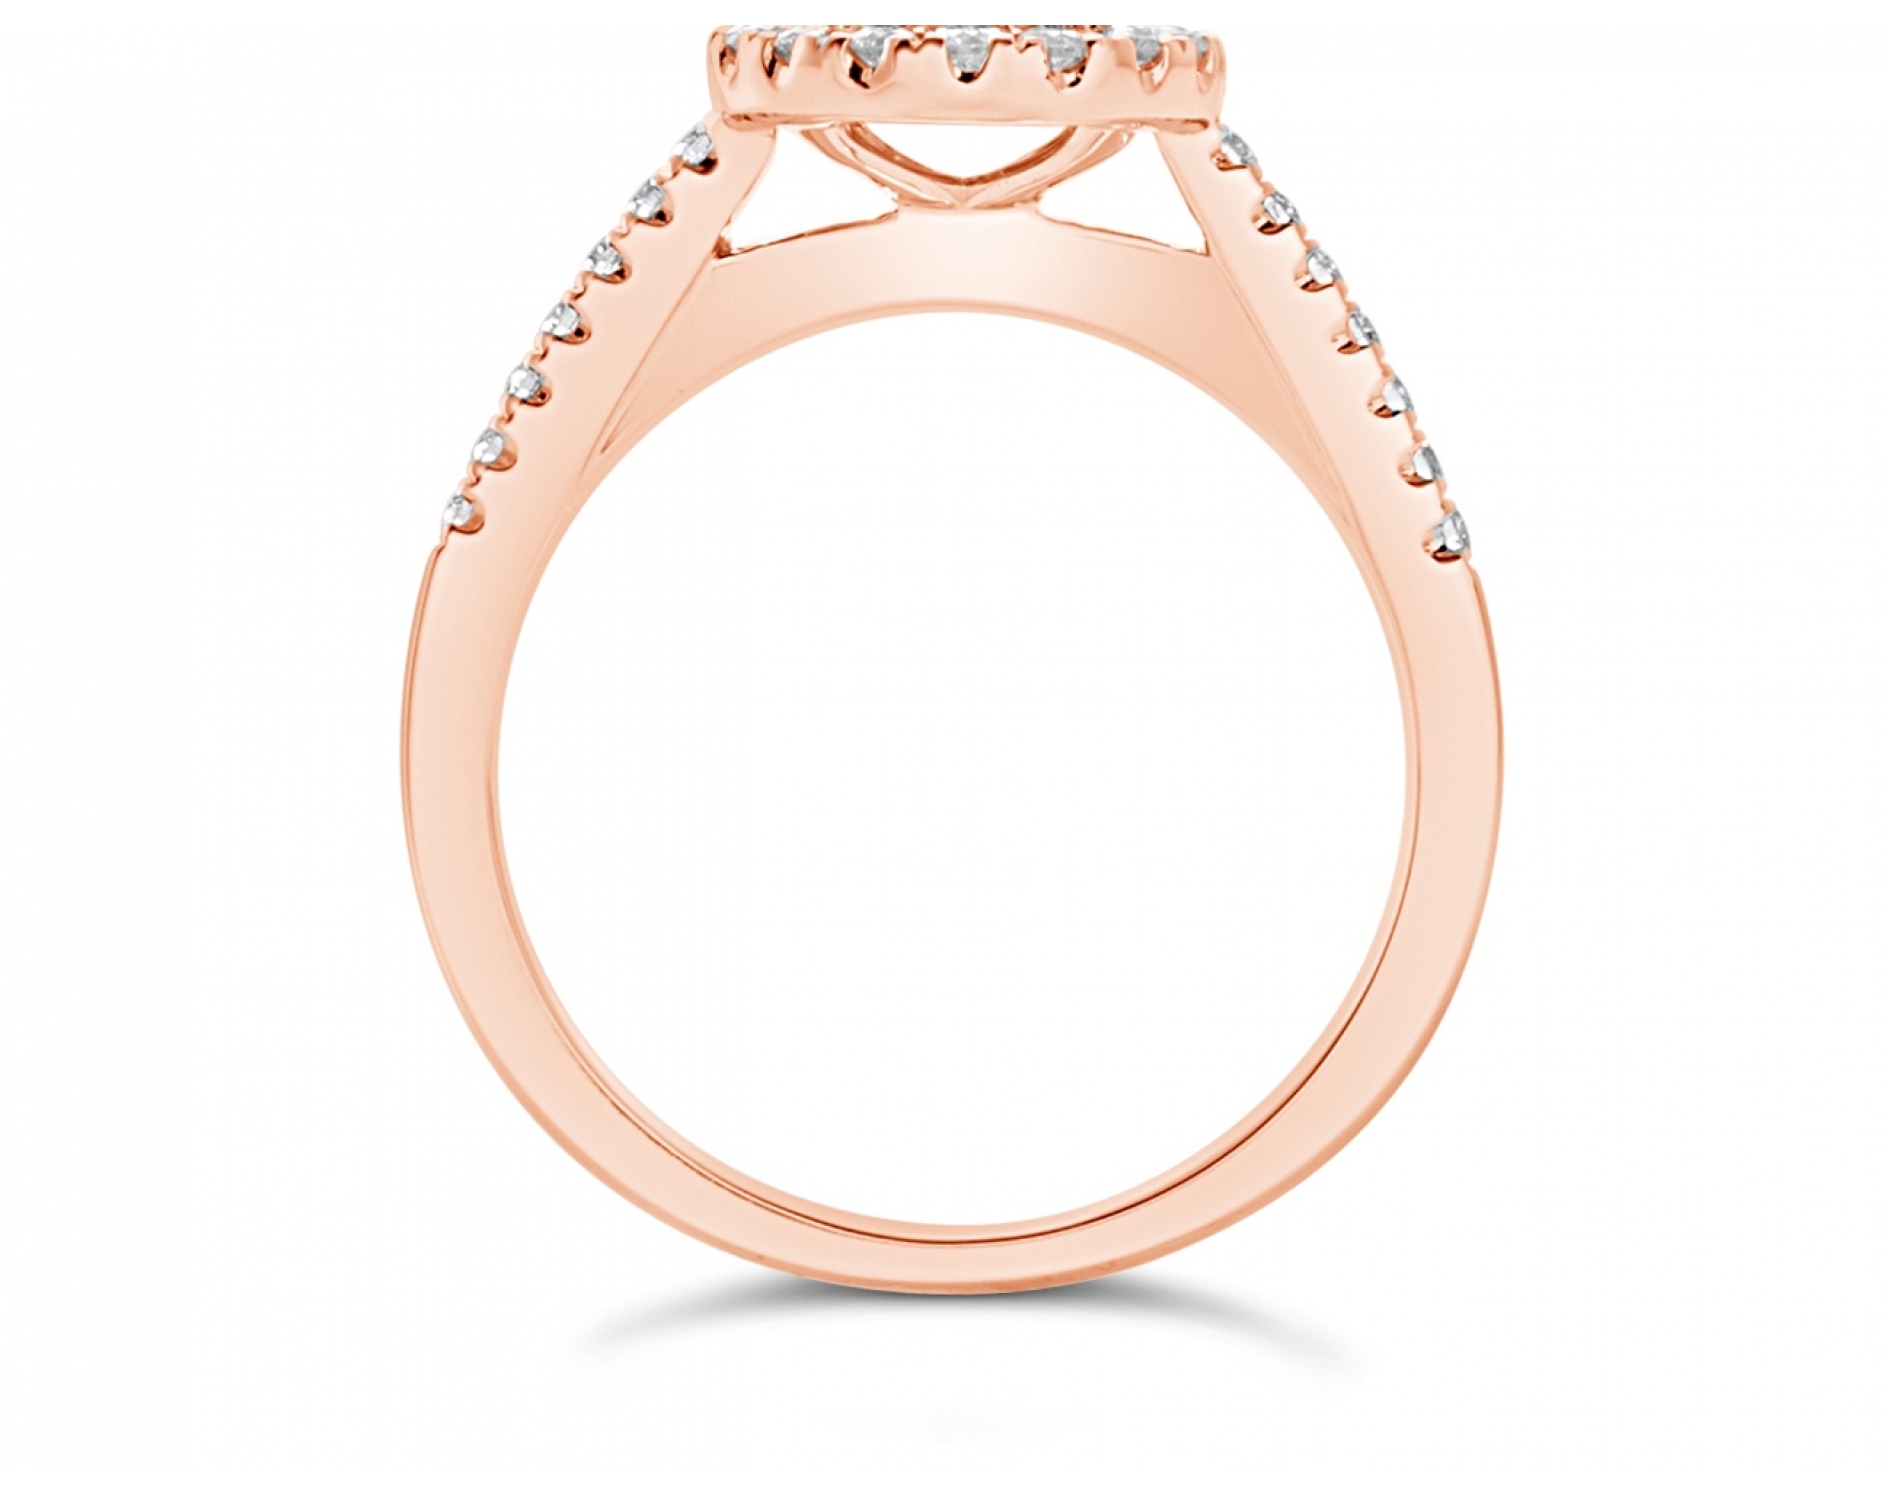 18k rose gold halo illusion set engagement ring with pave set sidestones